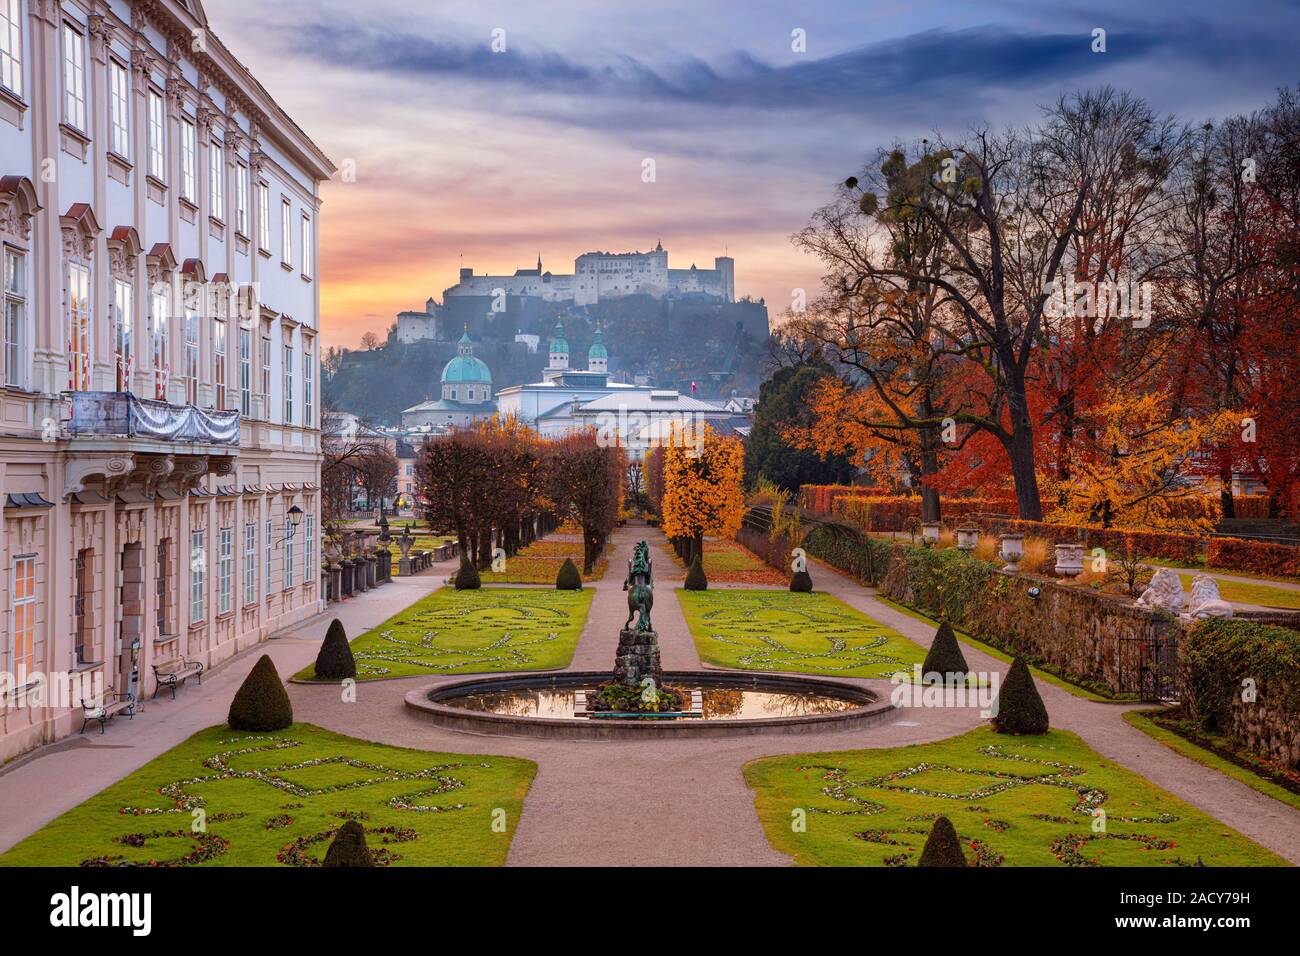 Salzburg, Austria. Cityscape image of the Salzburg, Austria with Mirabell Gardens during autumn sunrise. Stock Photo